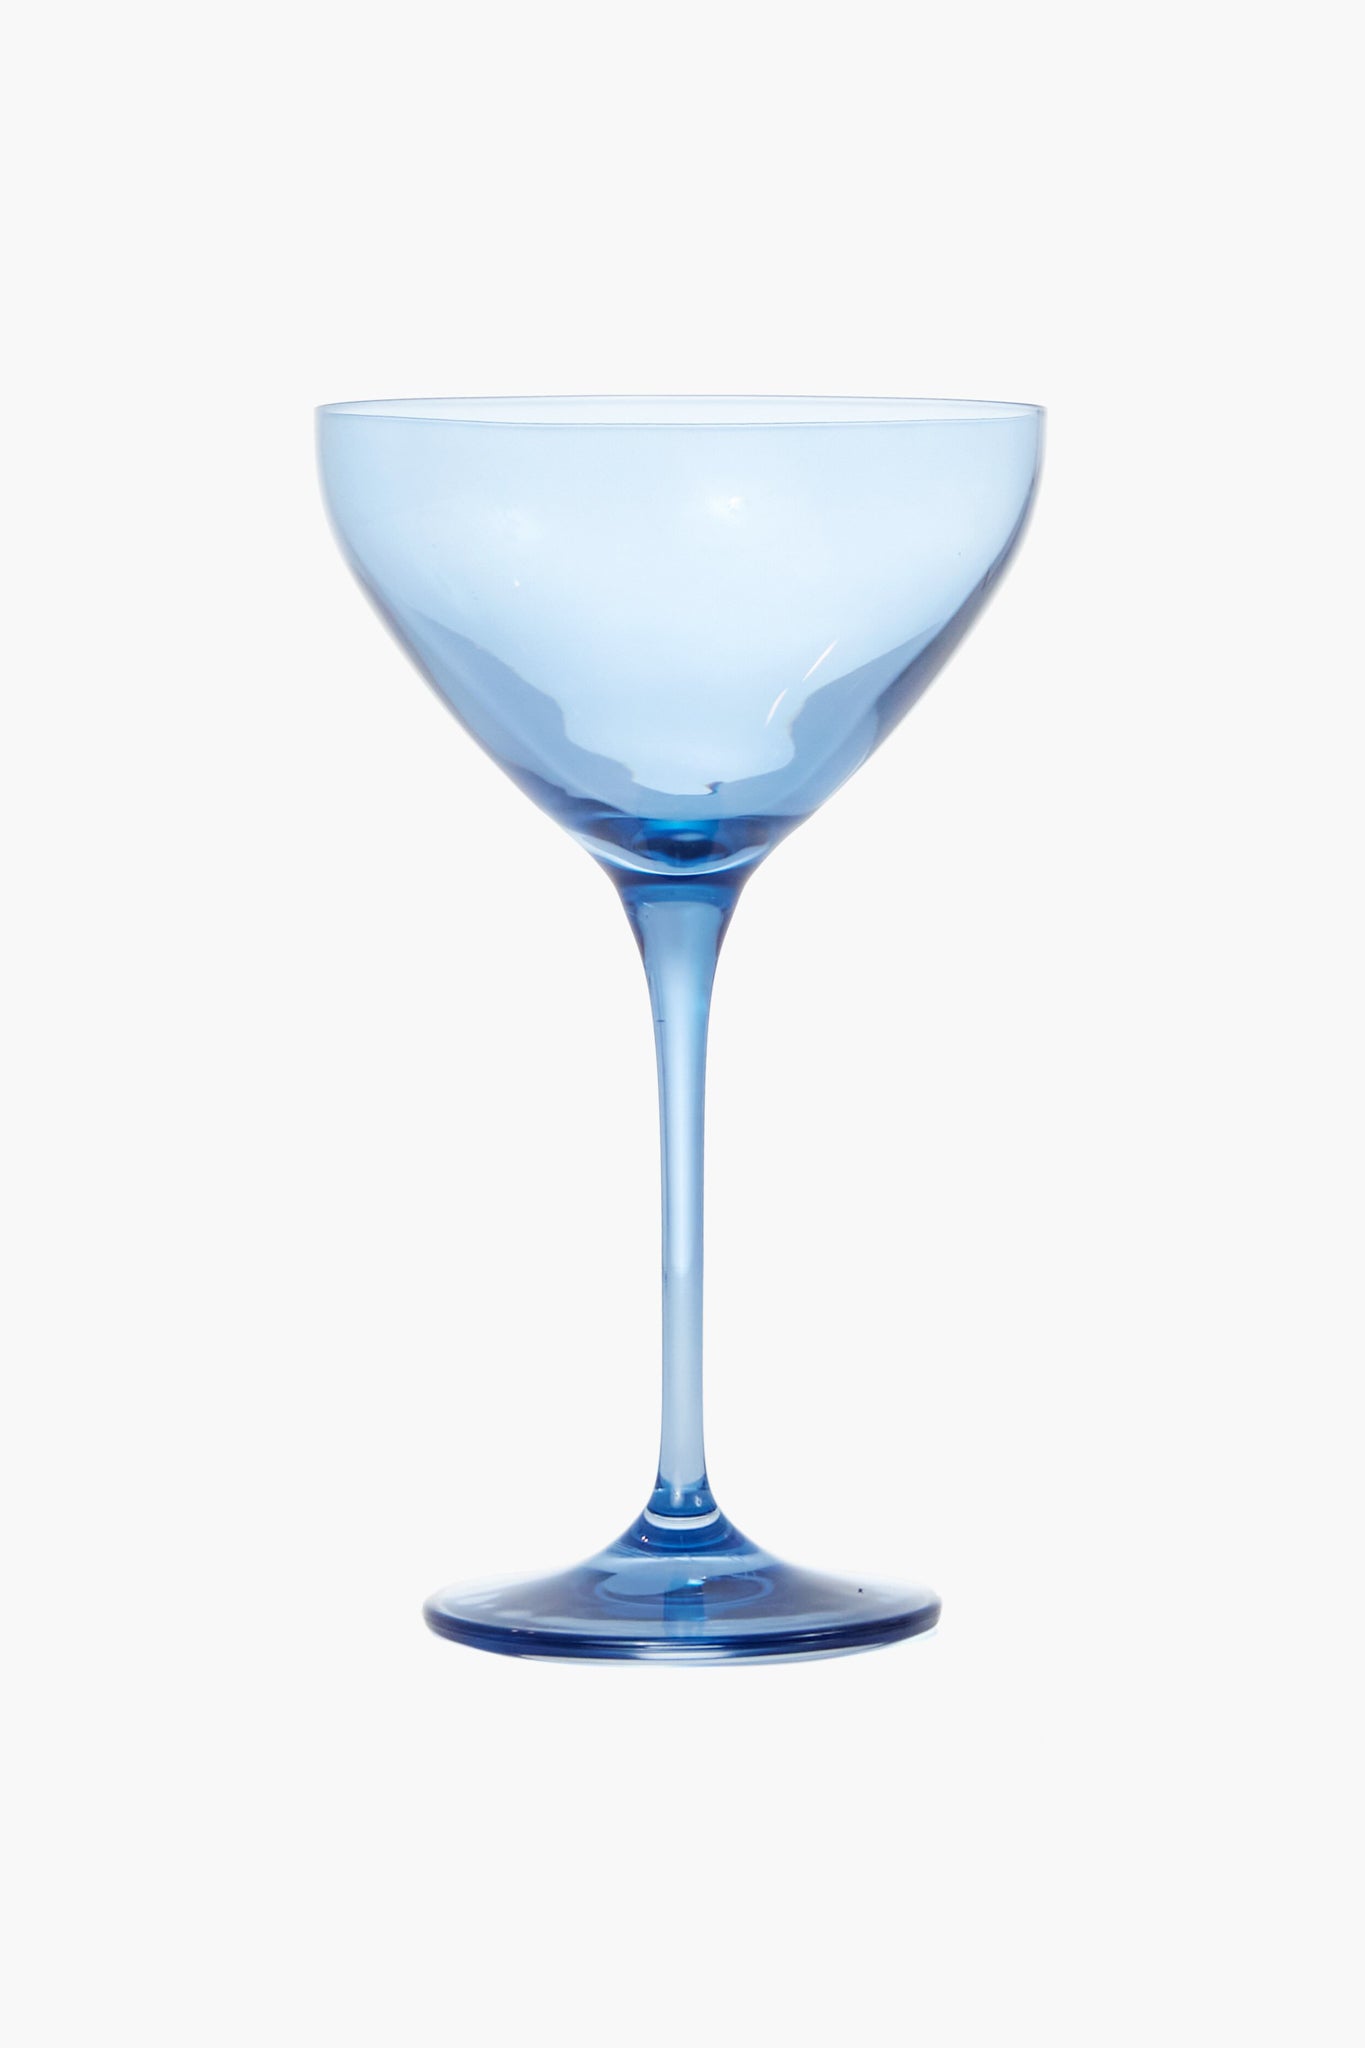 Estelle Colored Glass - Martini Glasses - Set of 2 Cobalt Blue